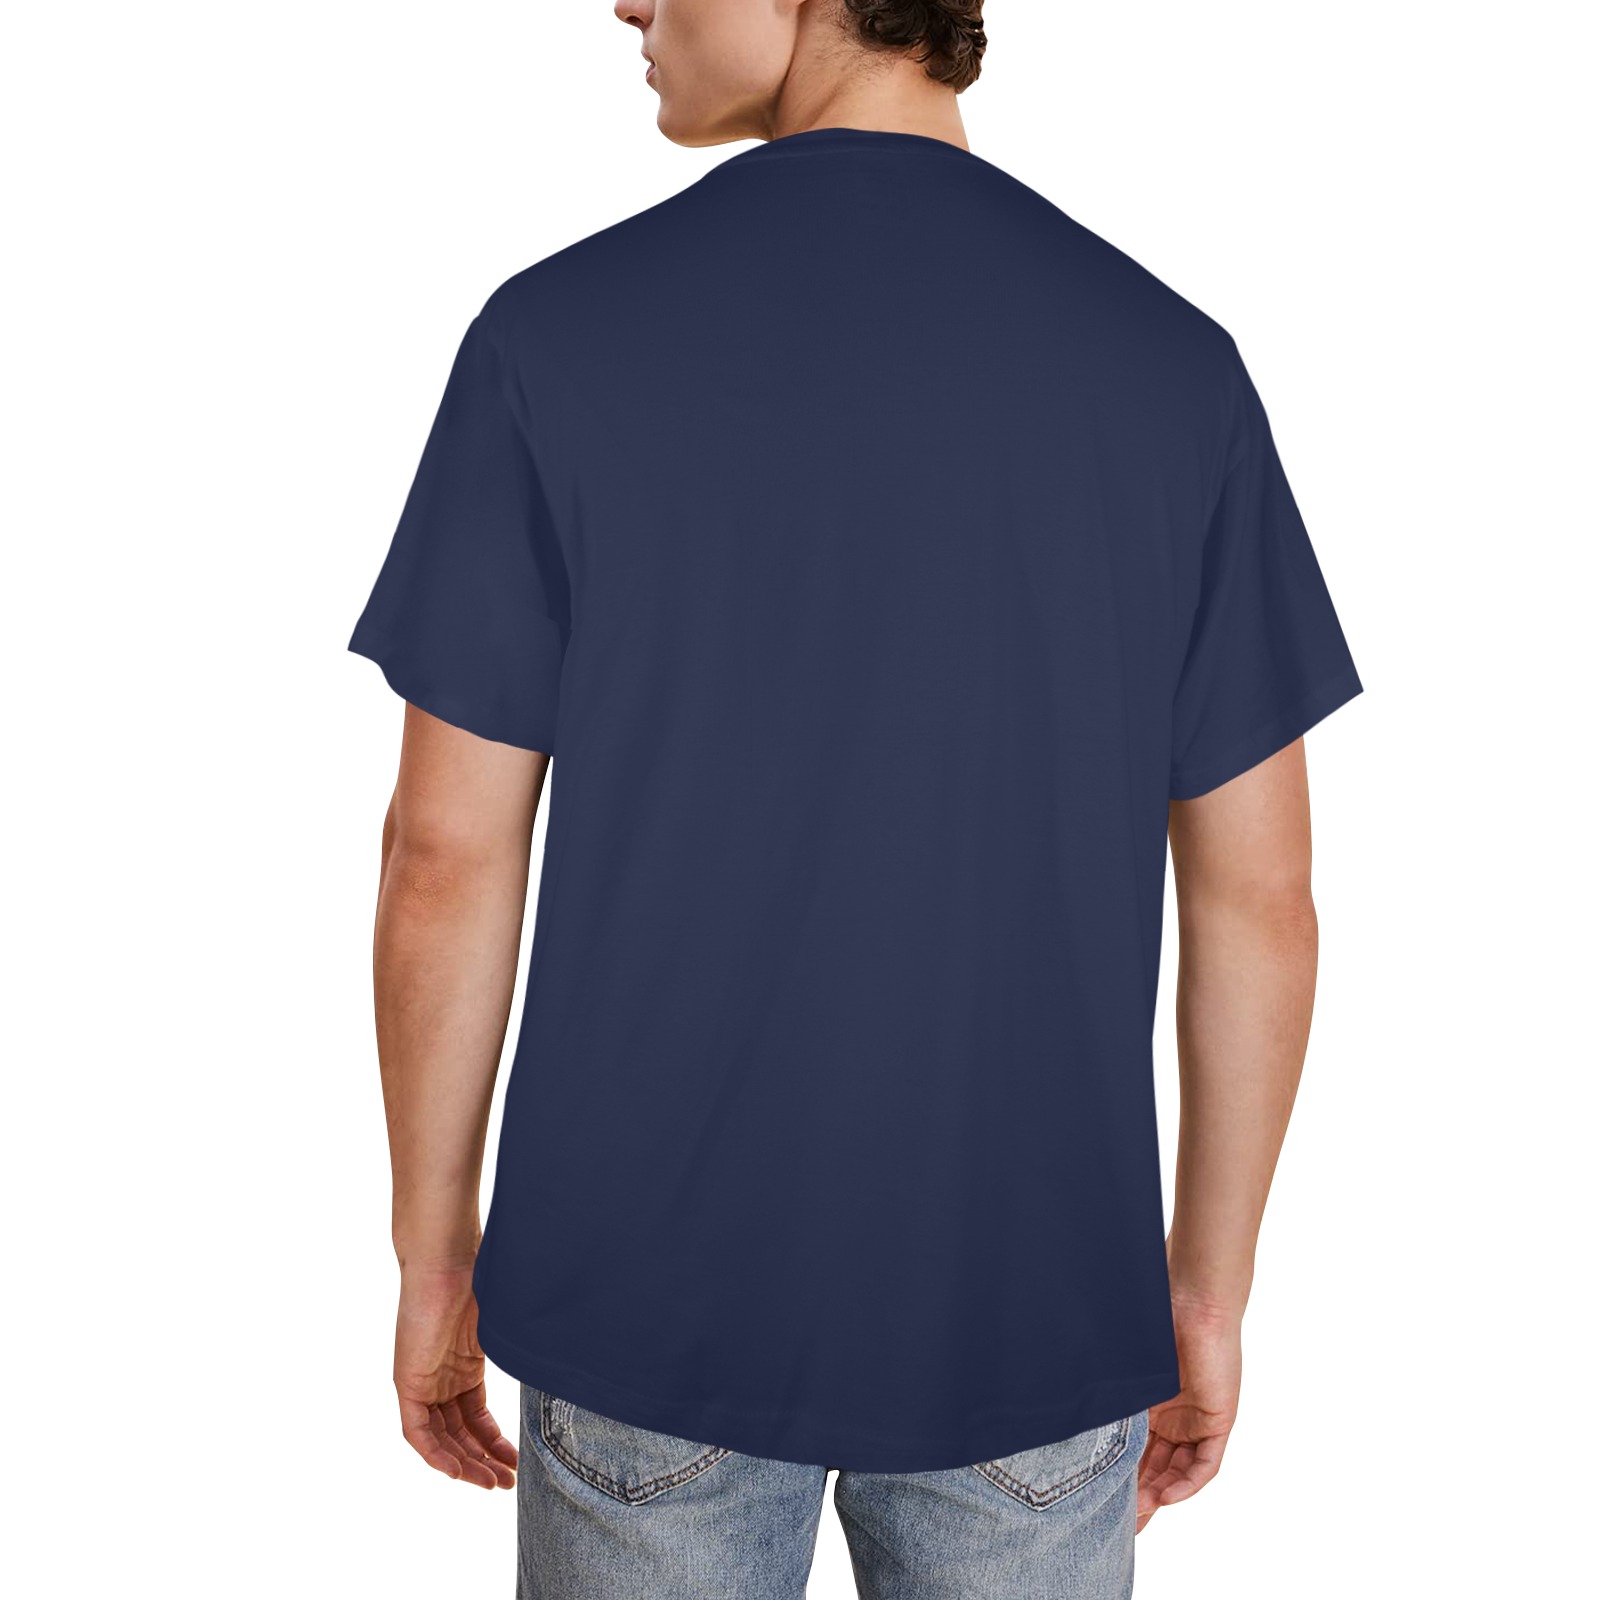 Jerusalem dechire bleu Men's Glow in the Dark T-shirt (Front Printing)